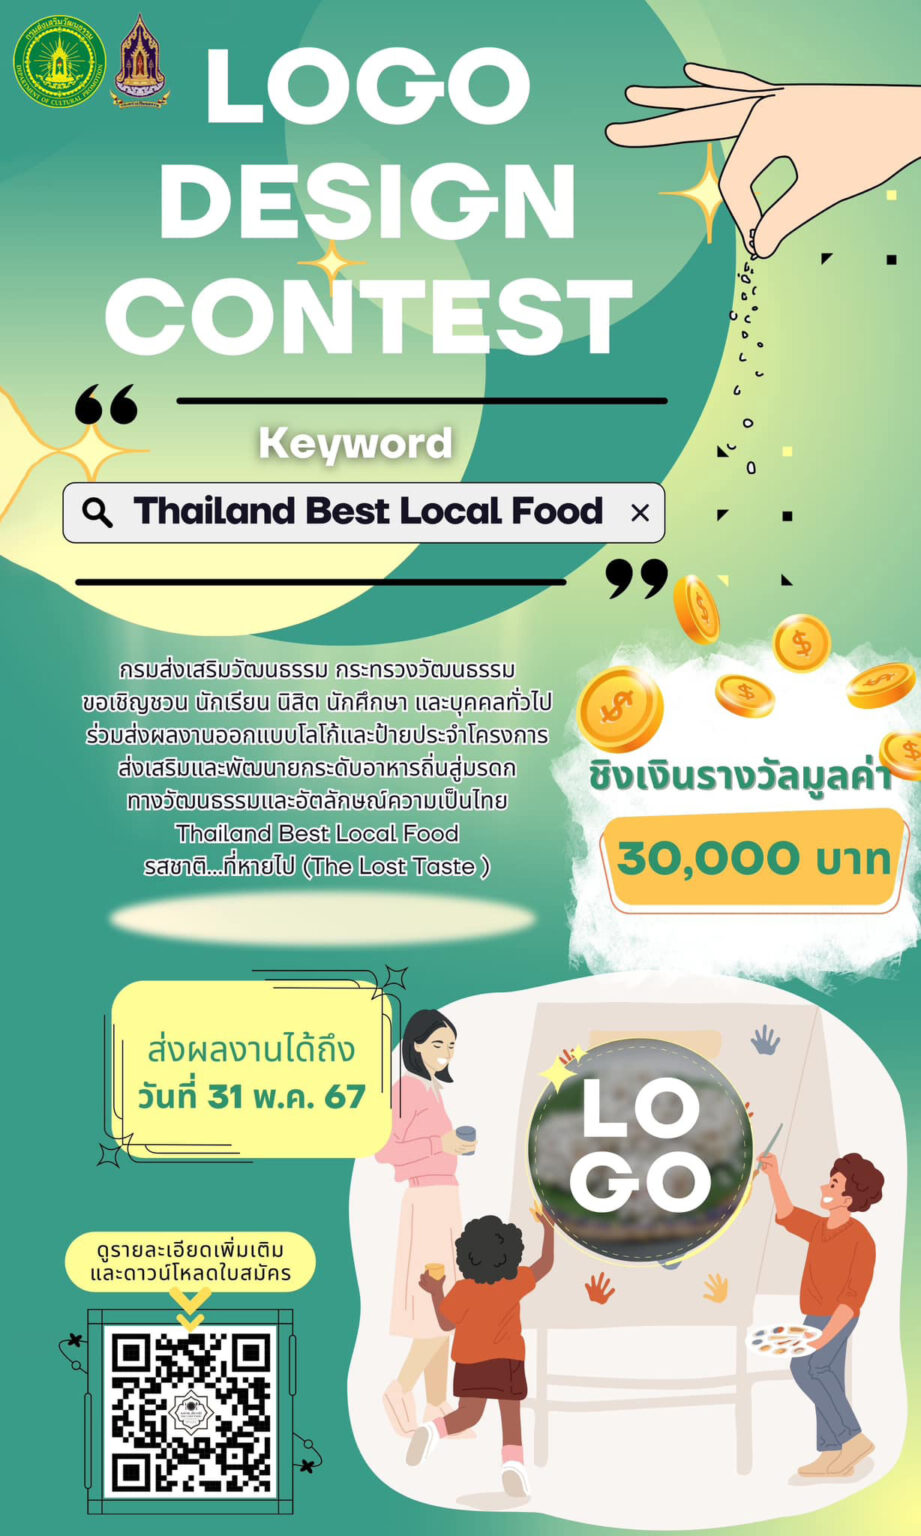 Thailand Best Local Food